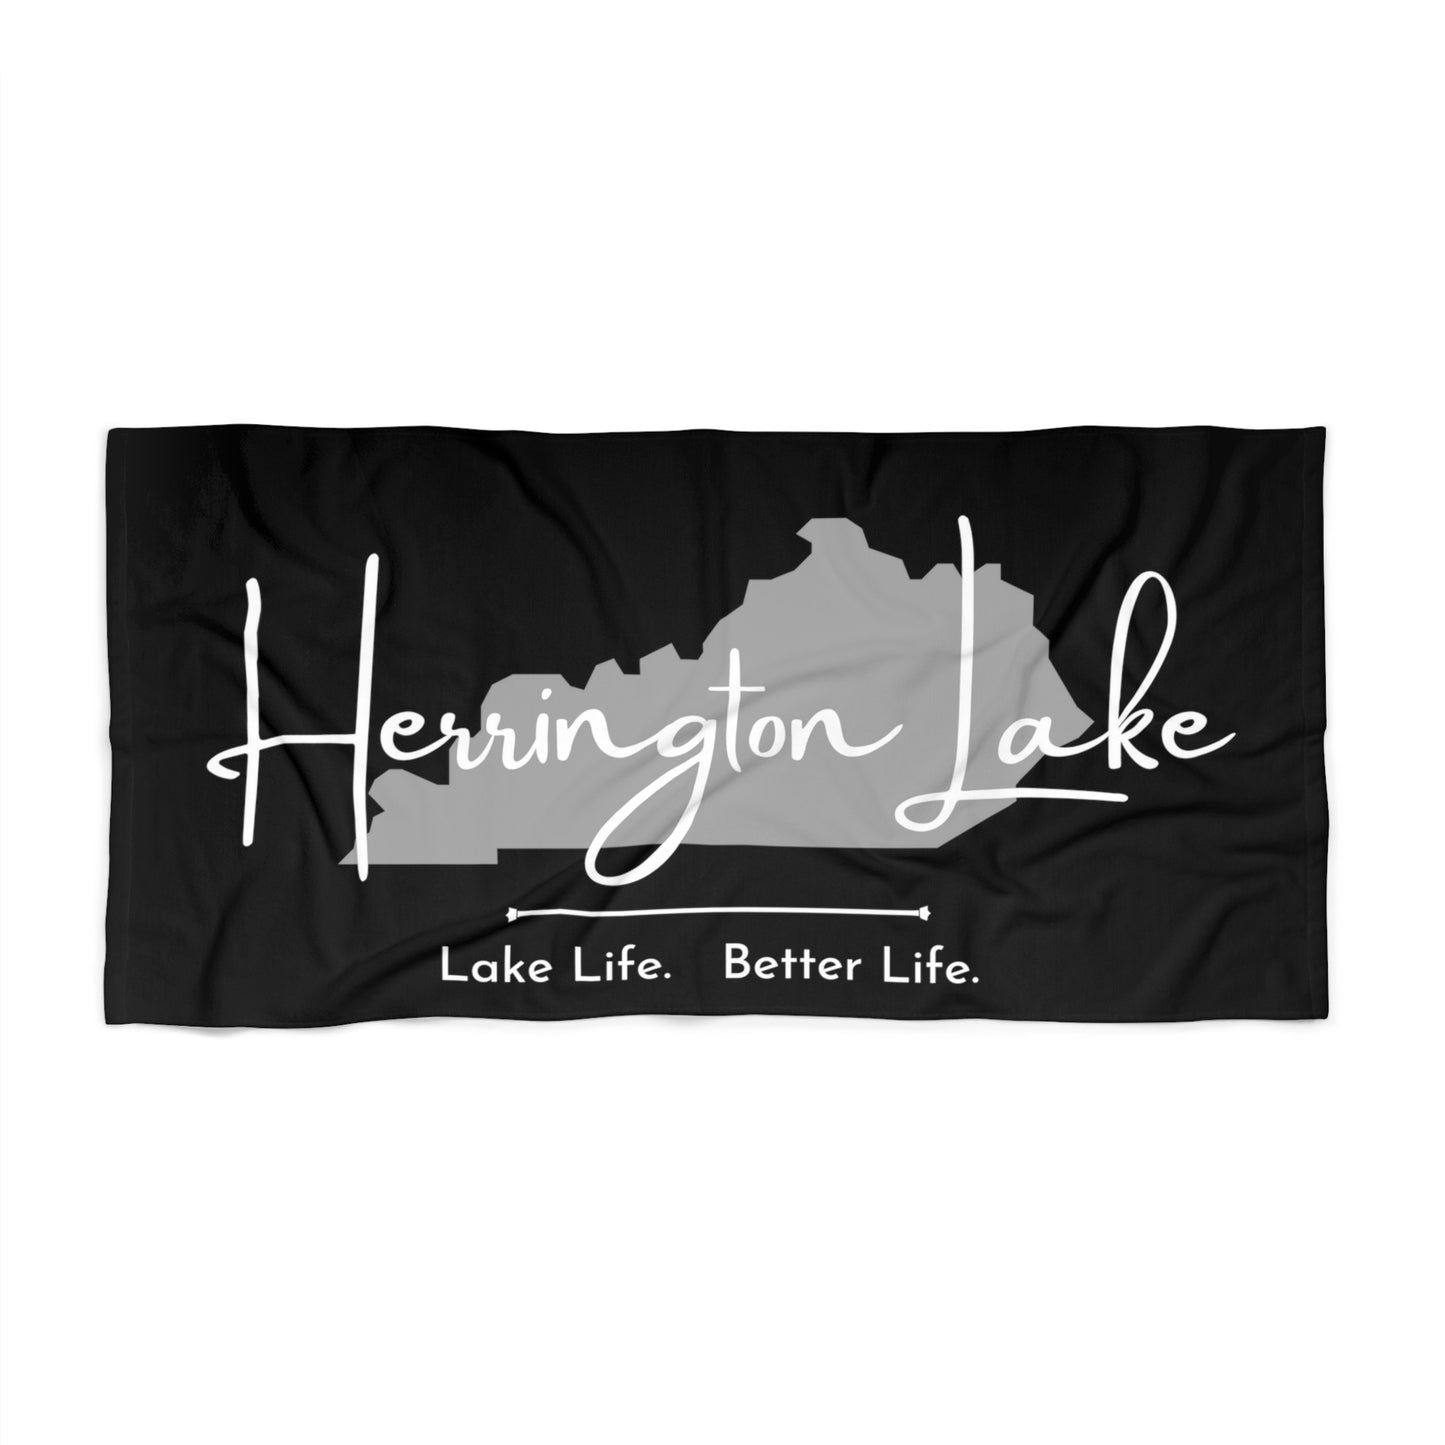 Herrington Lake Signature Collection Beach Towel (Black)